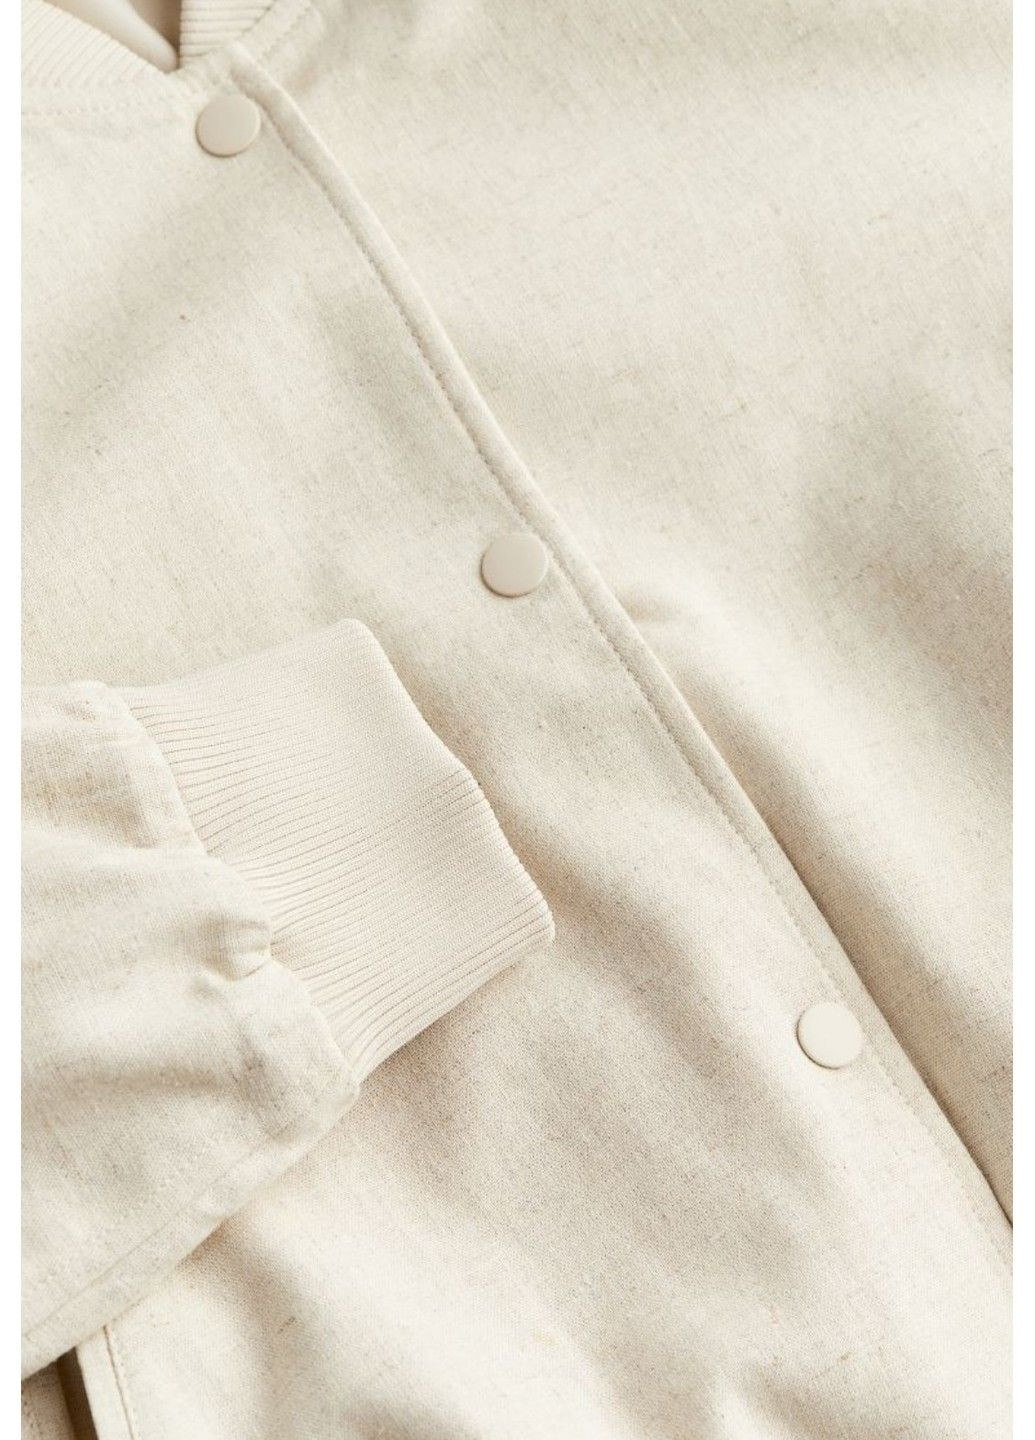 Светло-бежевая летняя женская льняная куртка бомбер н&м (56789) xs светло-бежевая H&M